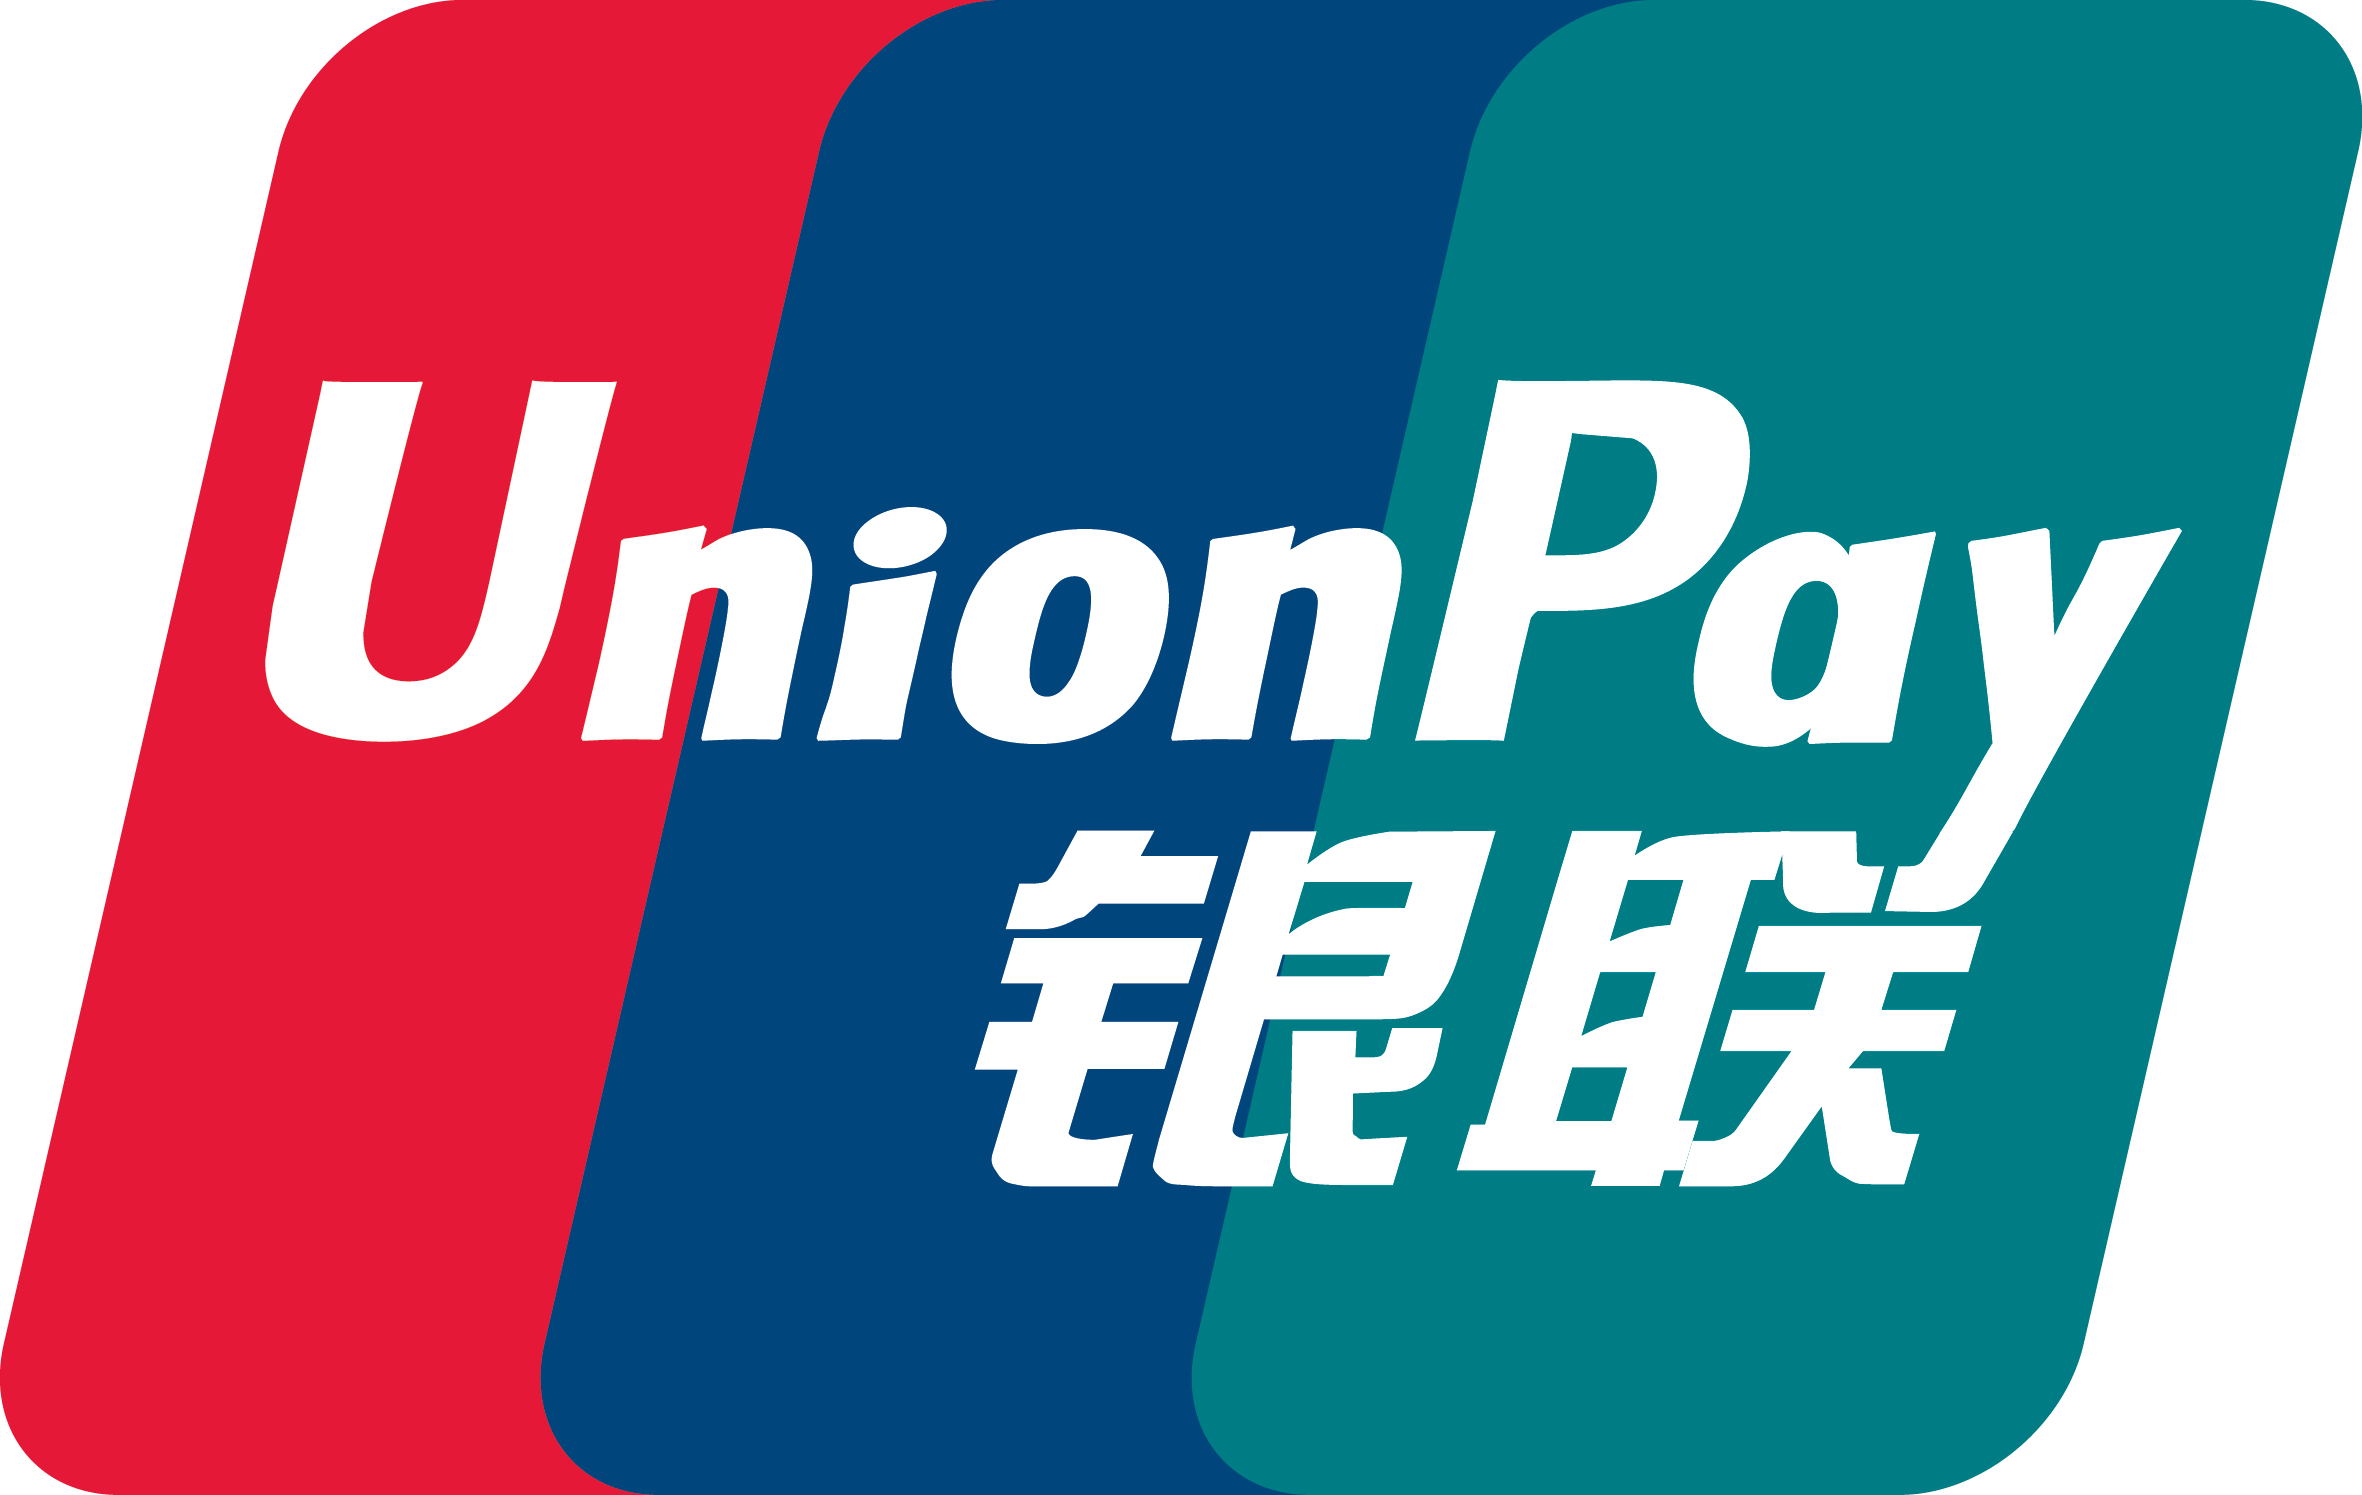 union-pay